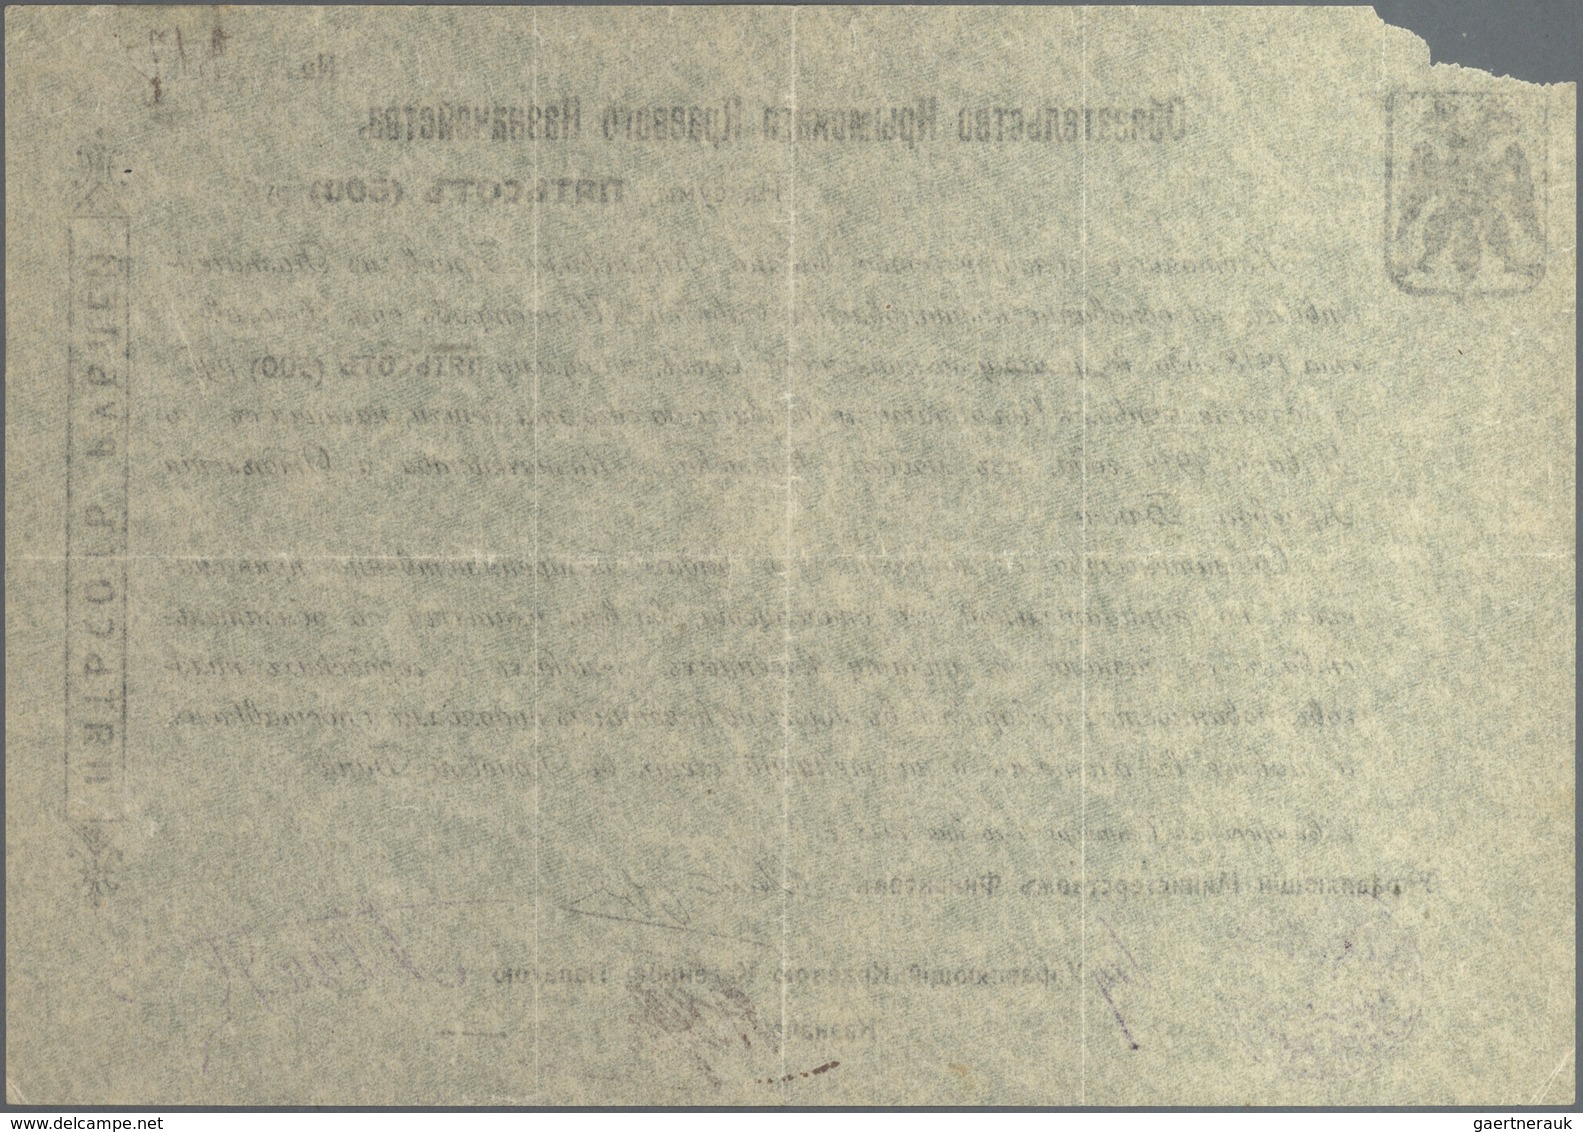 Russia / Russland: Obligation Of The Crimea Area Treasury 500 Rubles 1918, P.S366, Vertically Folded - Russia